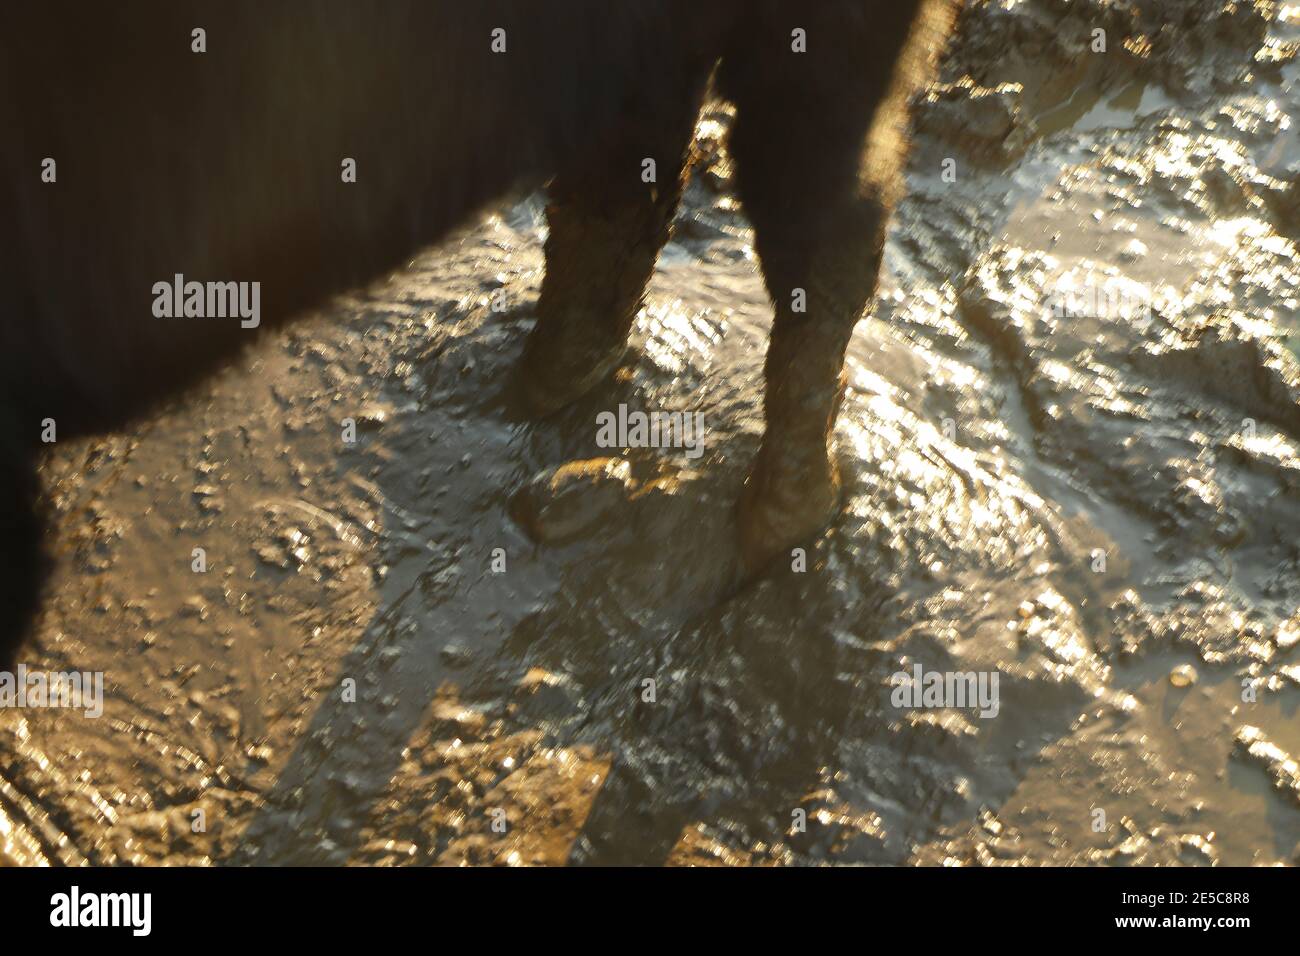 Kühe Hufe tief im Schlamm vergraben Stockfoto